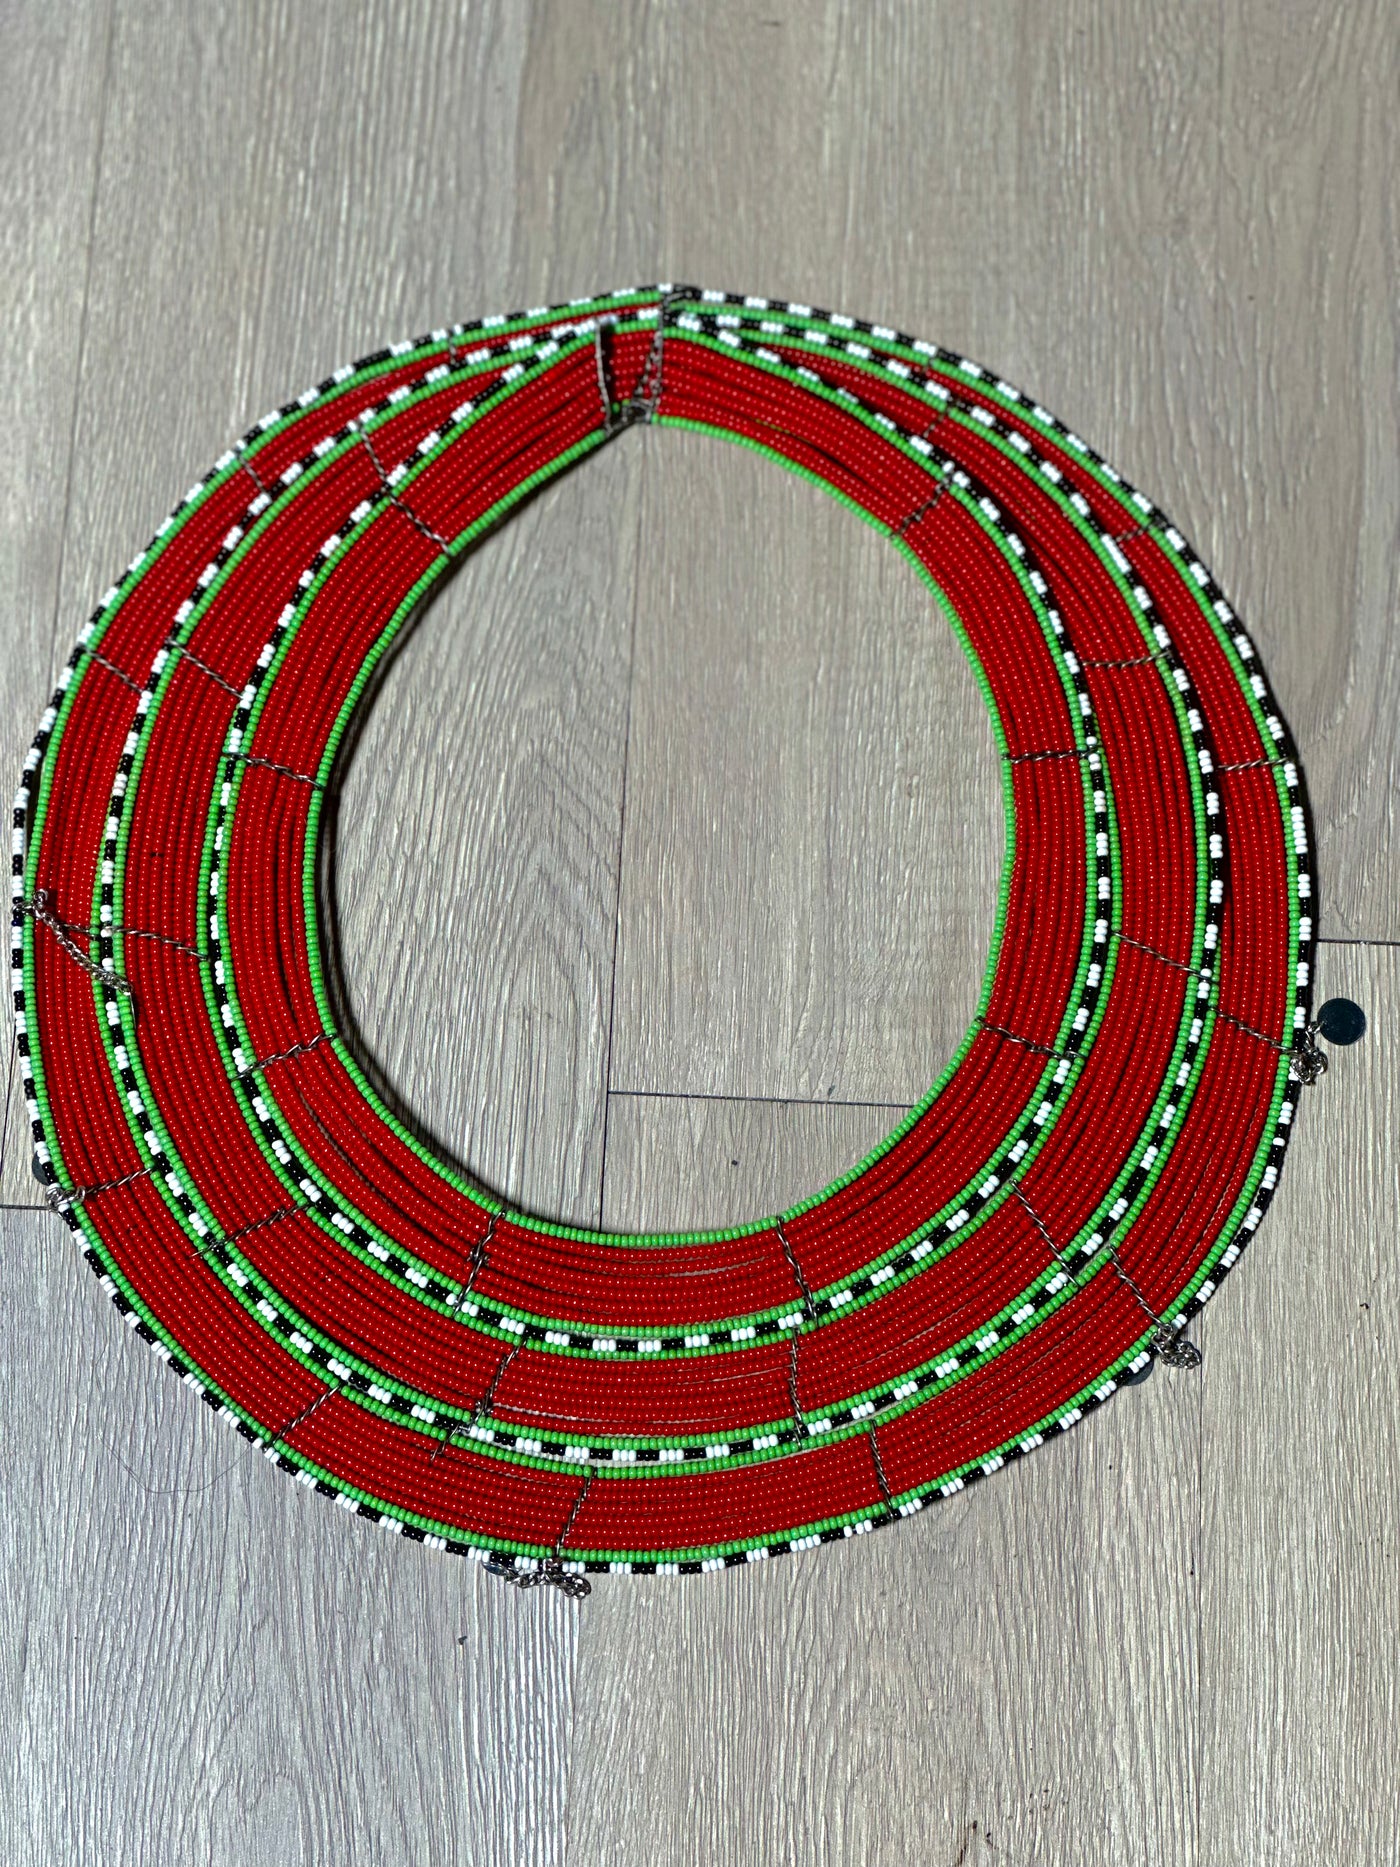 Kenyan Maasai triple bound necklace / neckpiece